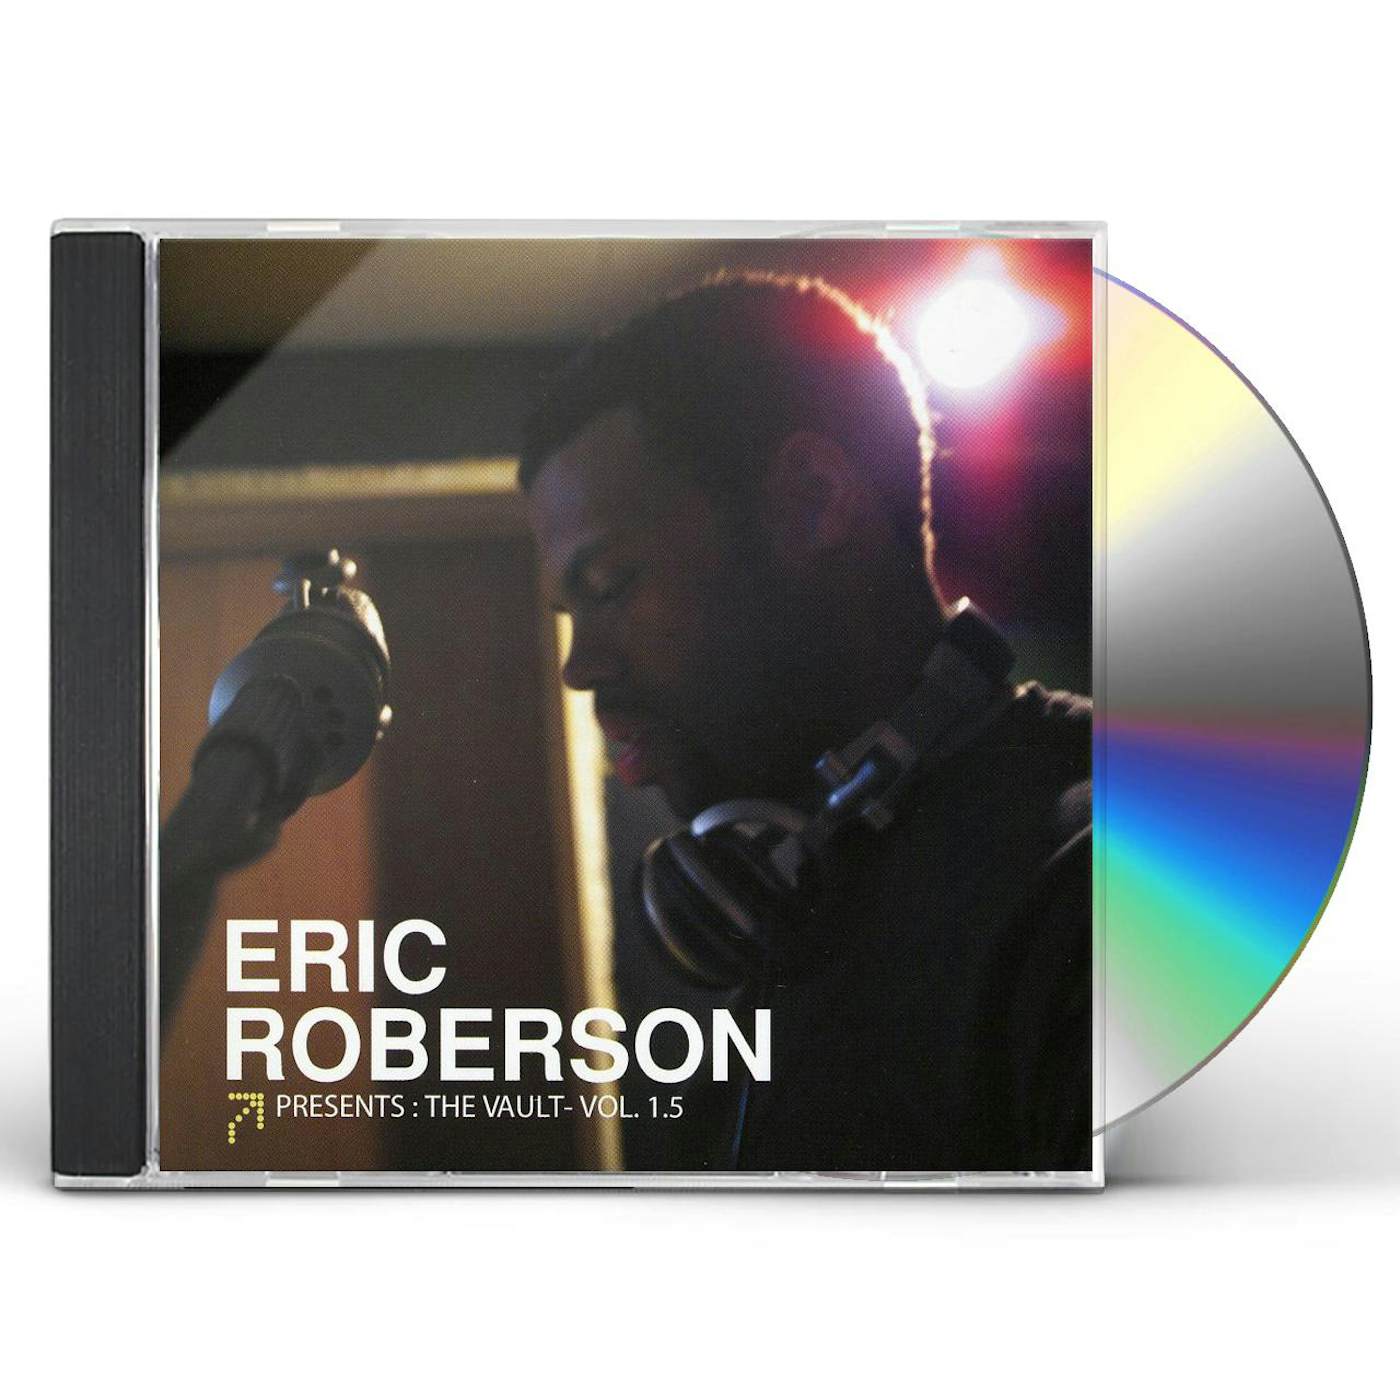 Eric Roberson PRESENTS: THE VAULT 1.5 CD